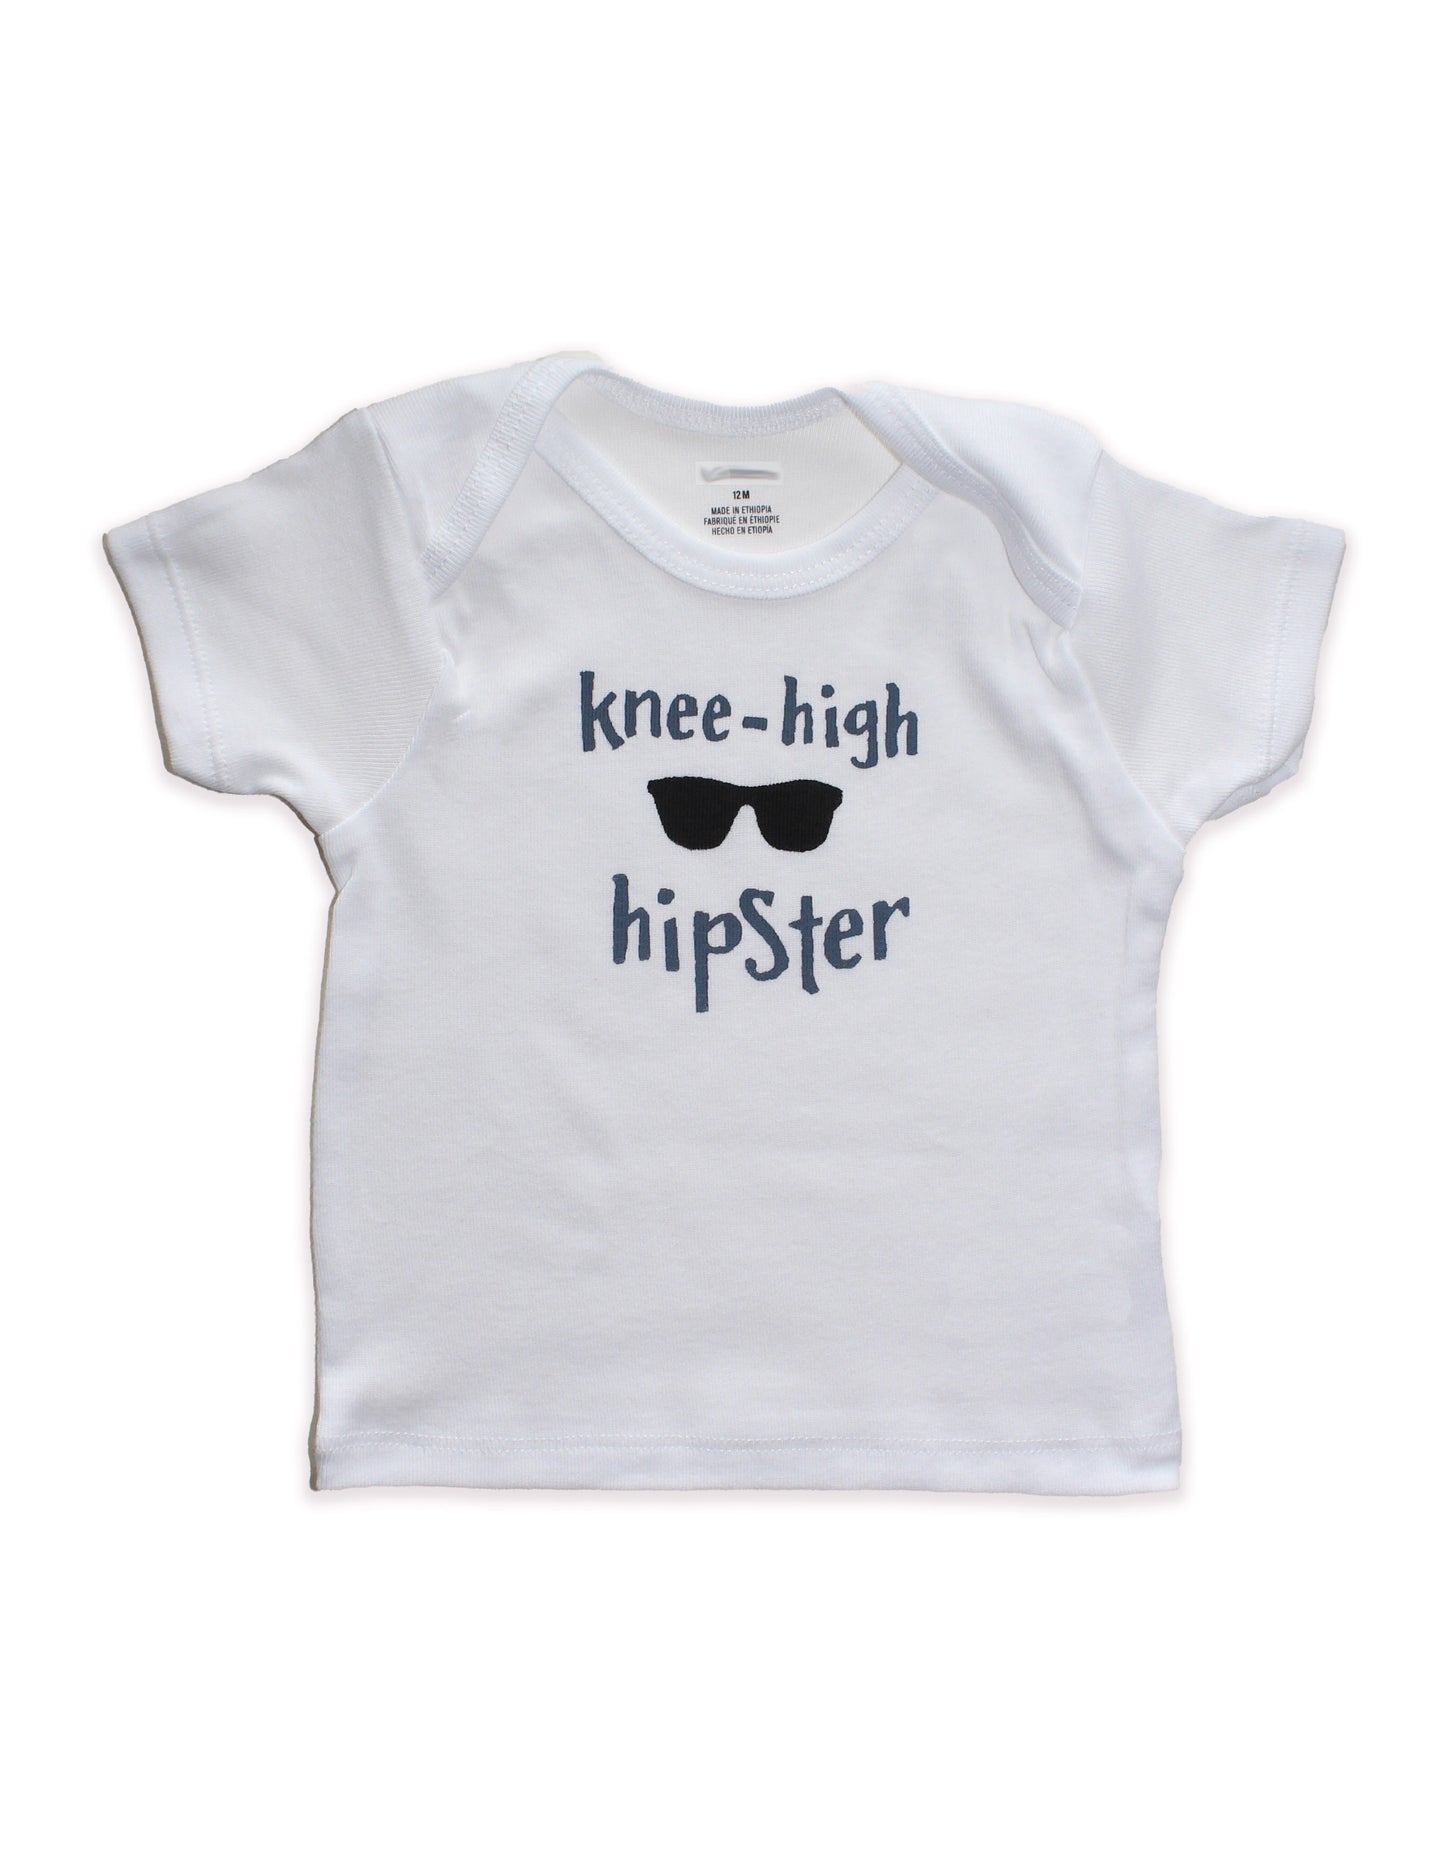 Knee-high Hipster Tee